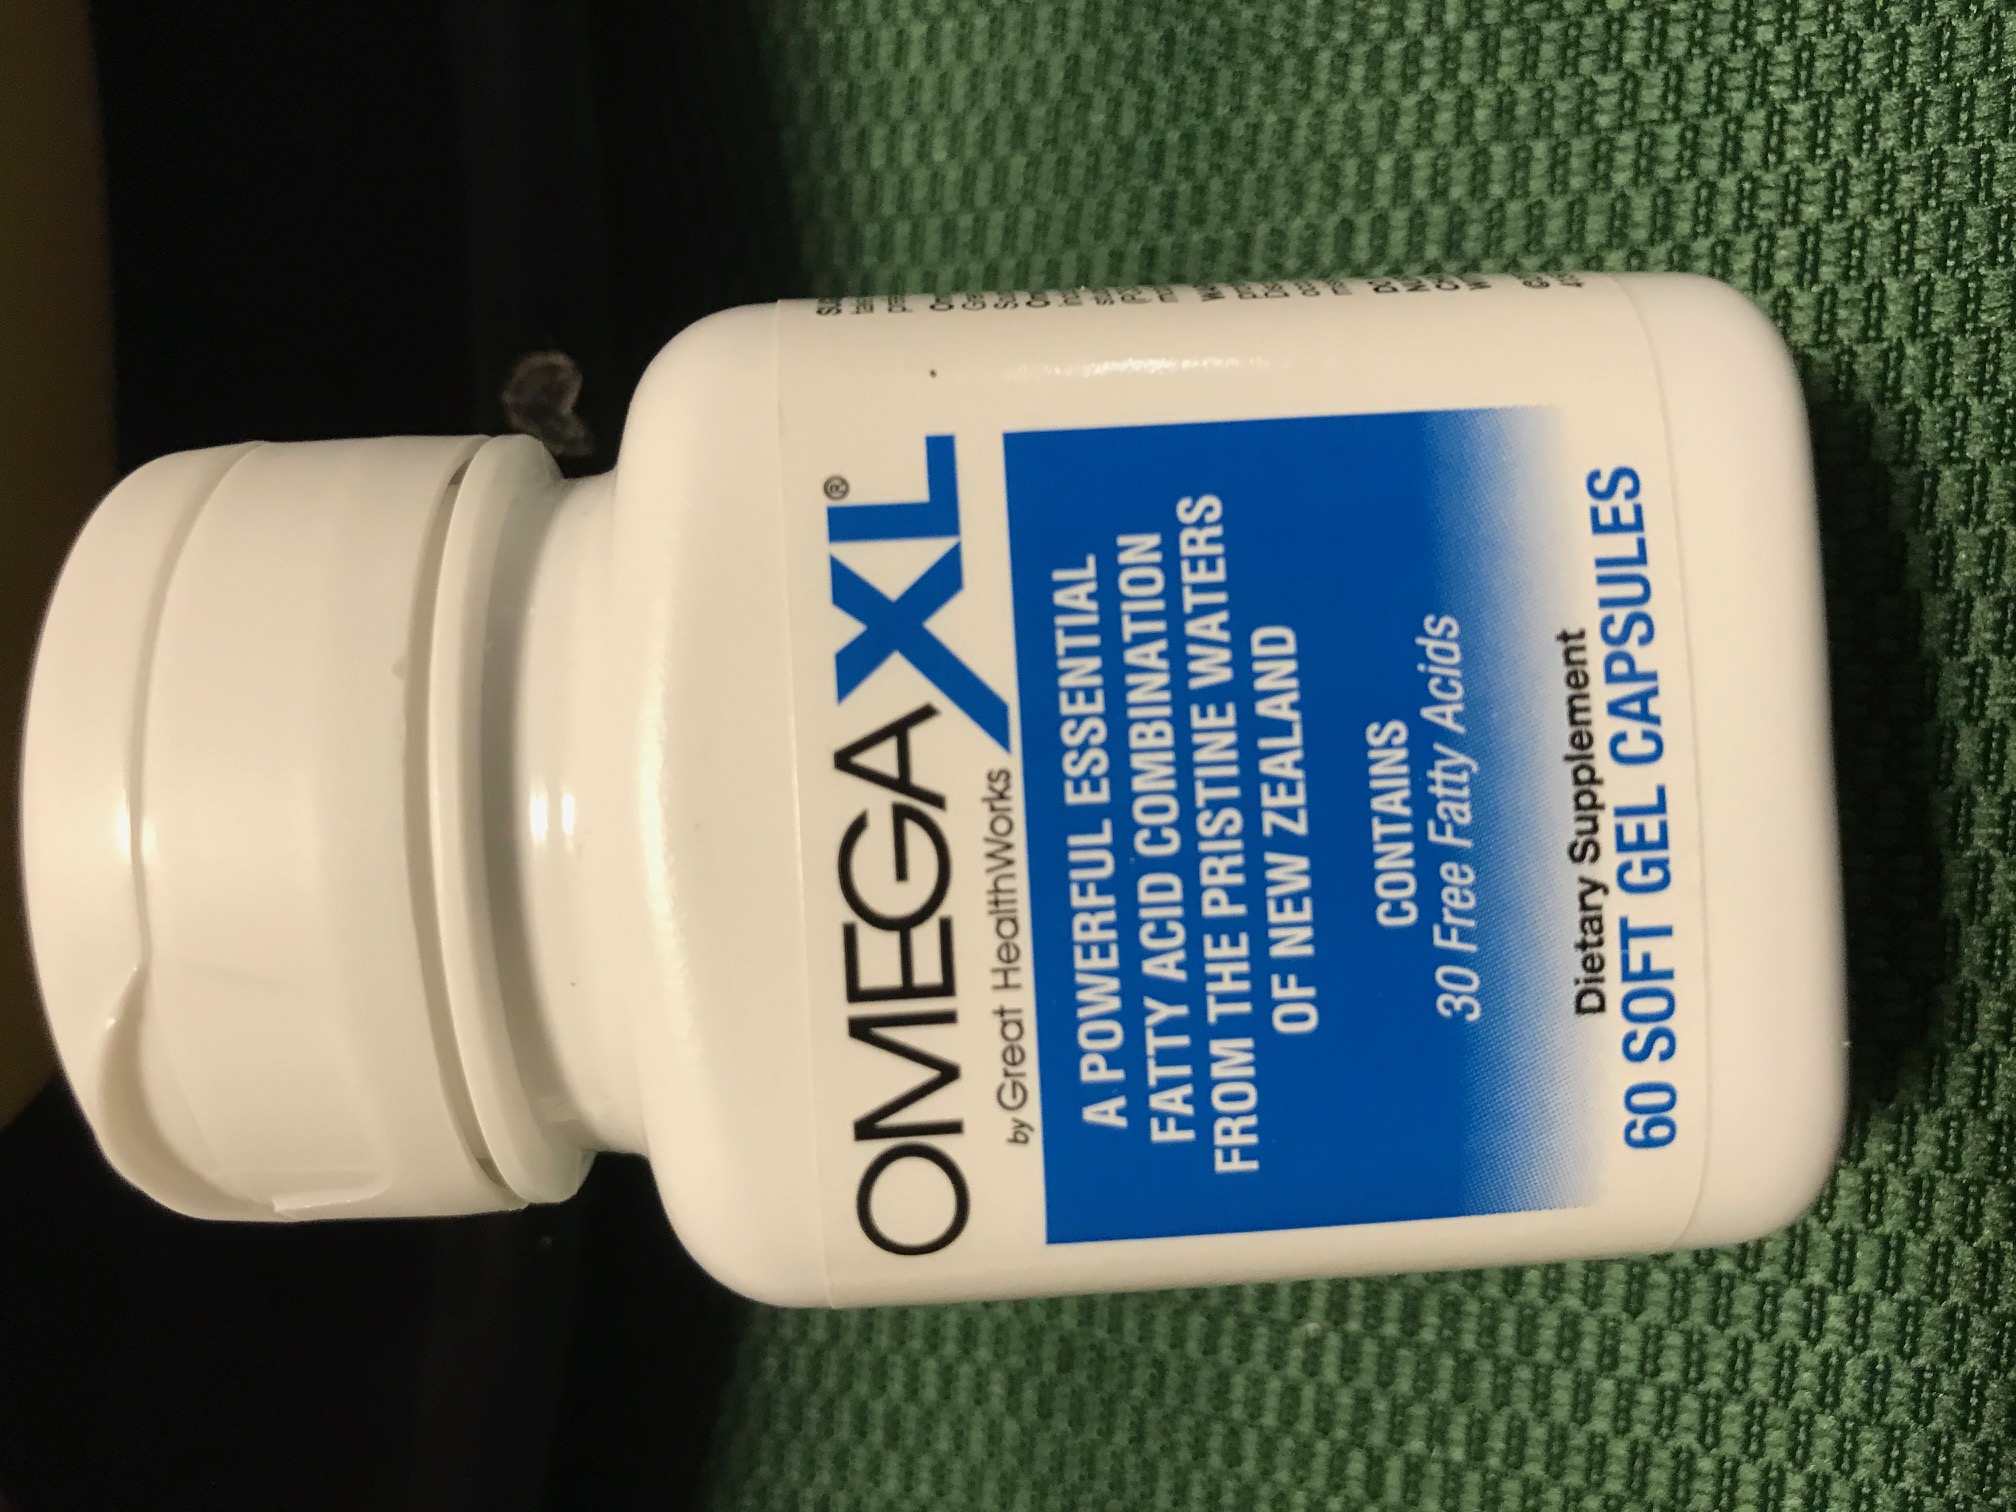 omega XL bottle photo nutritional supplement